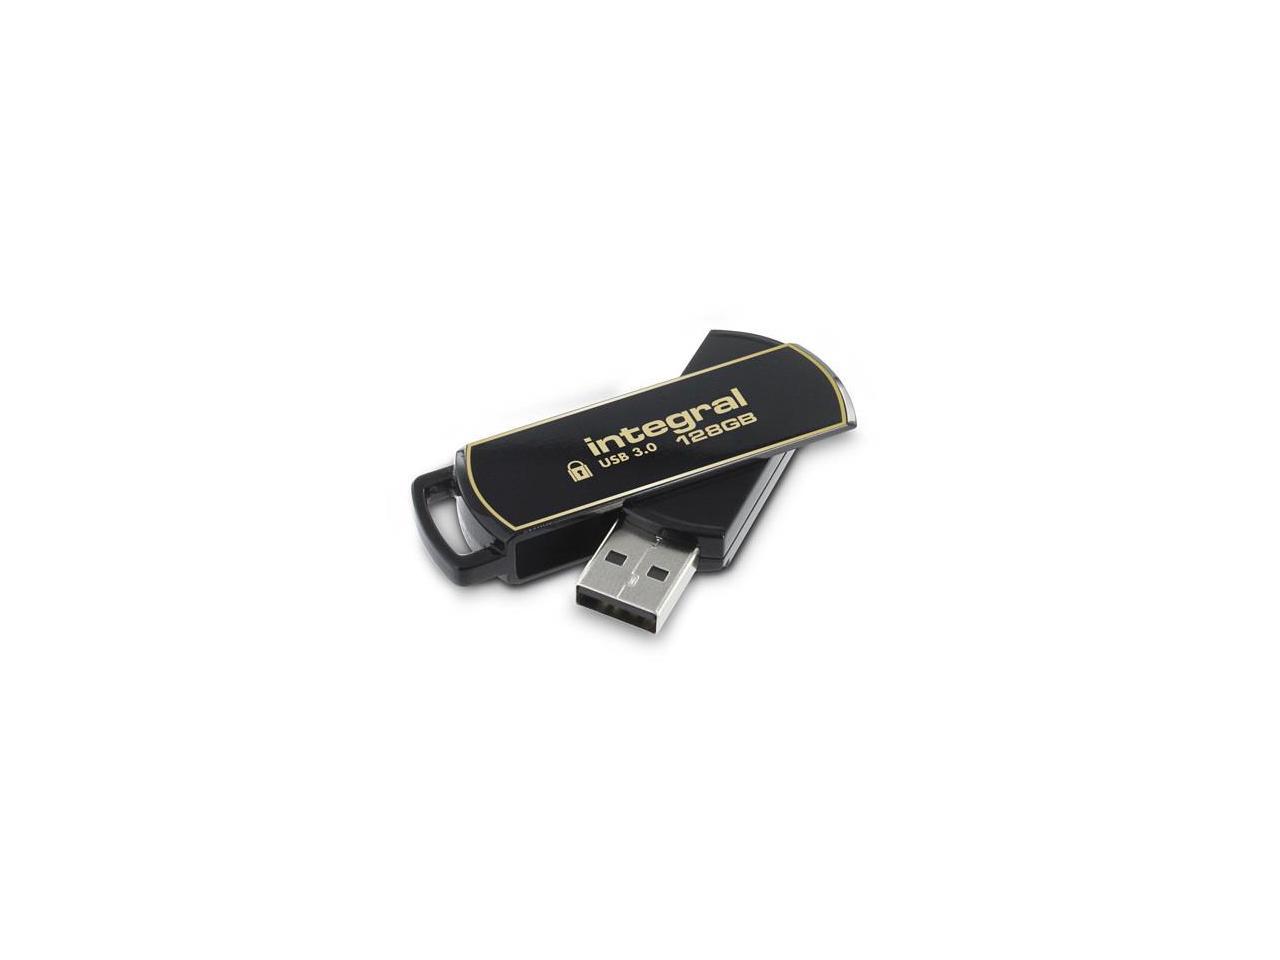 128GB Integral Secure 360 Encrypted USB3.0 Flash Drive (256-bit AES Encryption)